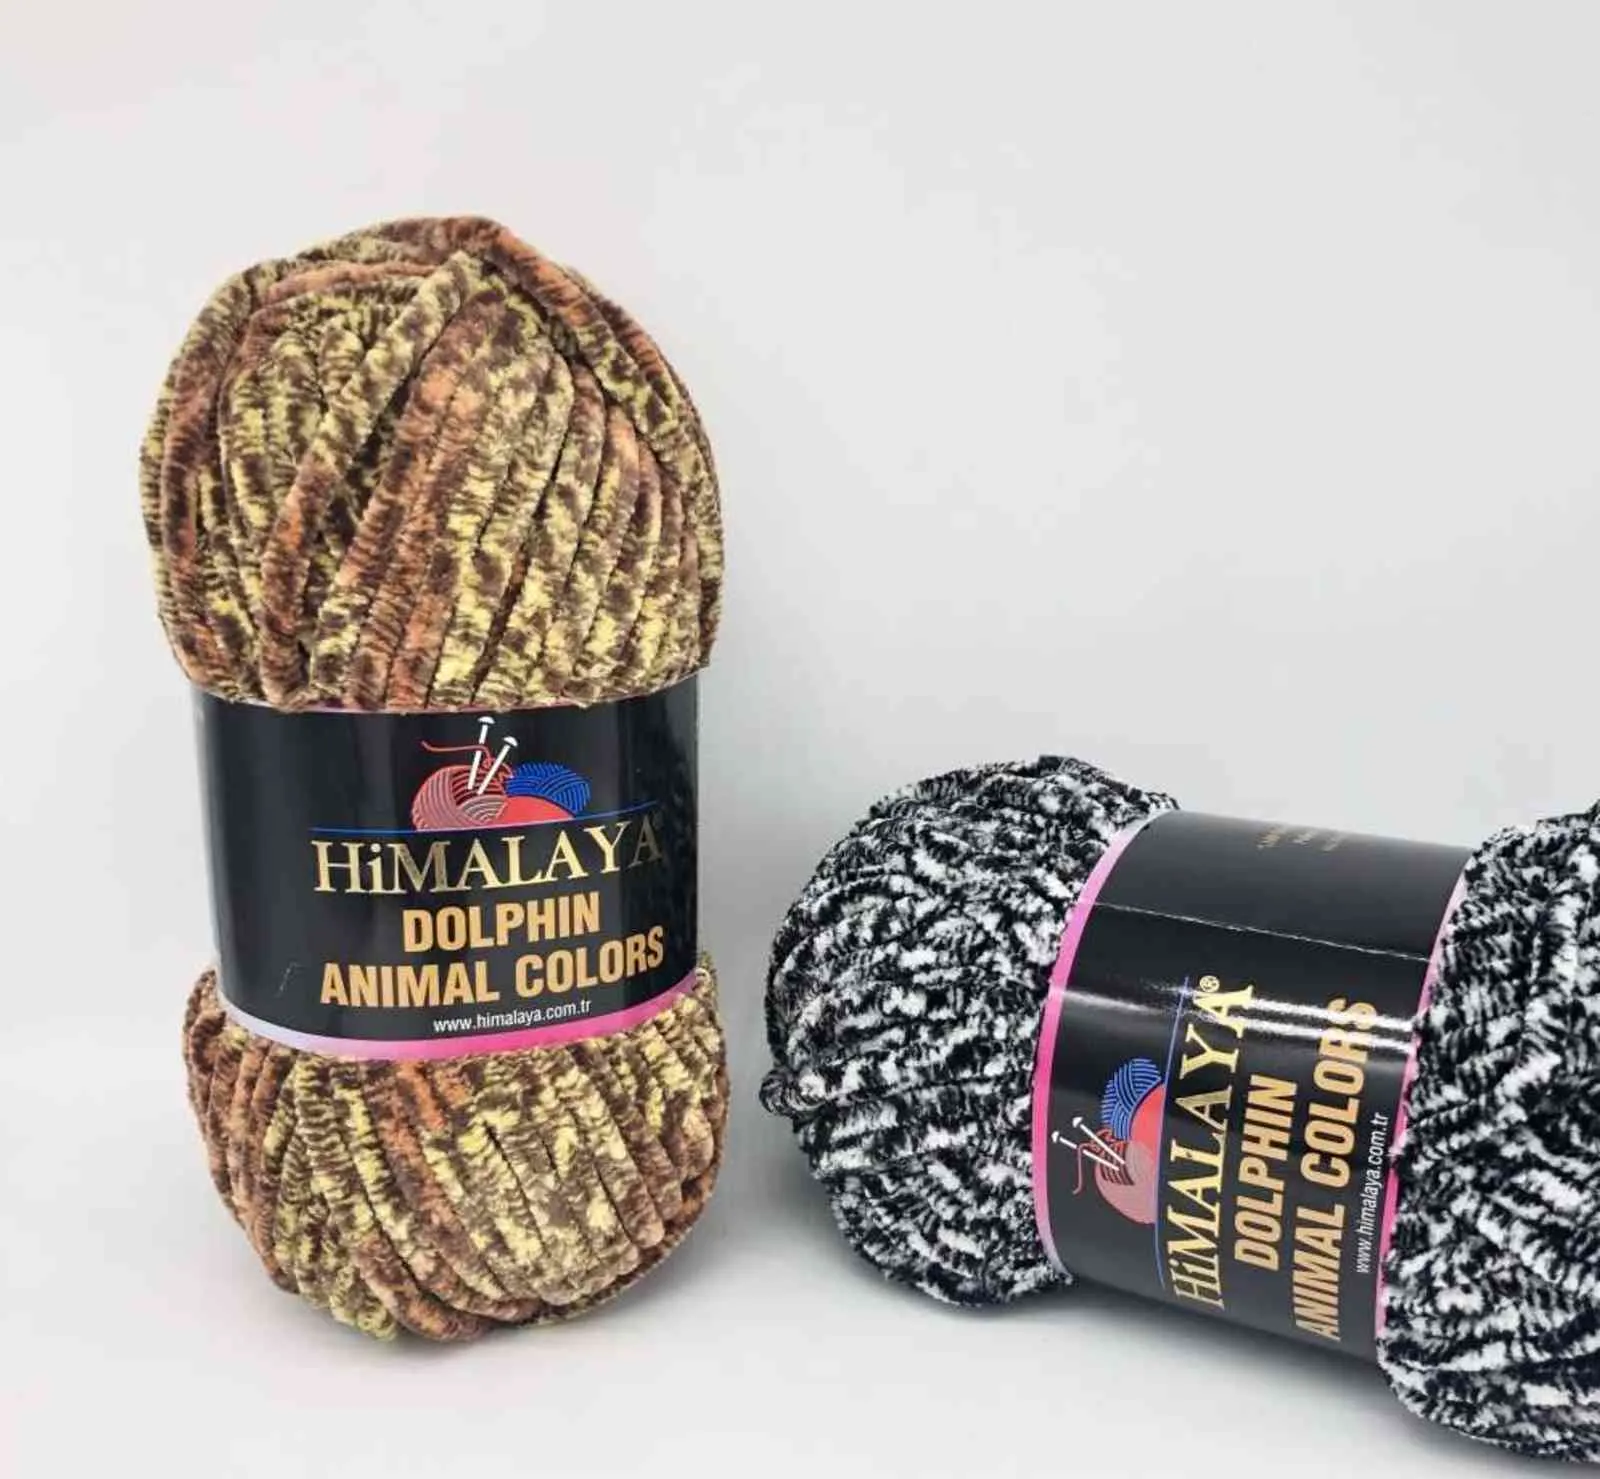 Himalaya Dolphin Baby Bulky Knitting Crochet Yarn 4 LOT/BALLS 100g